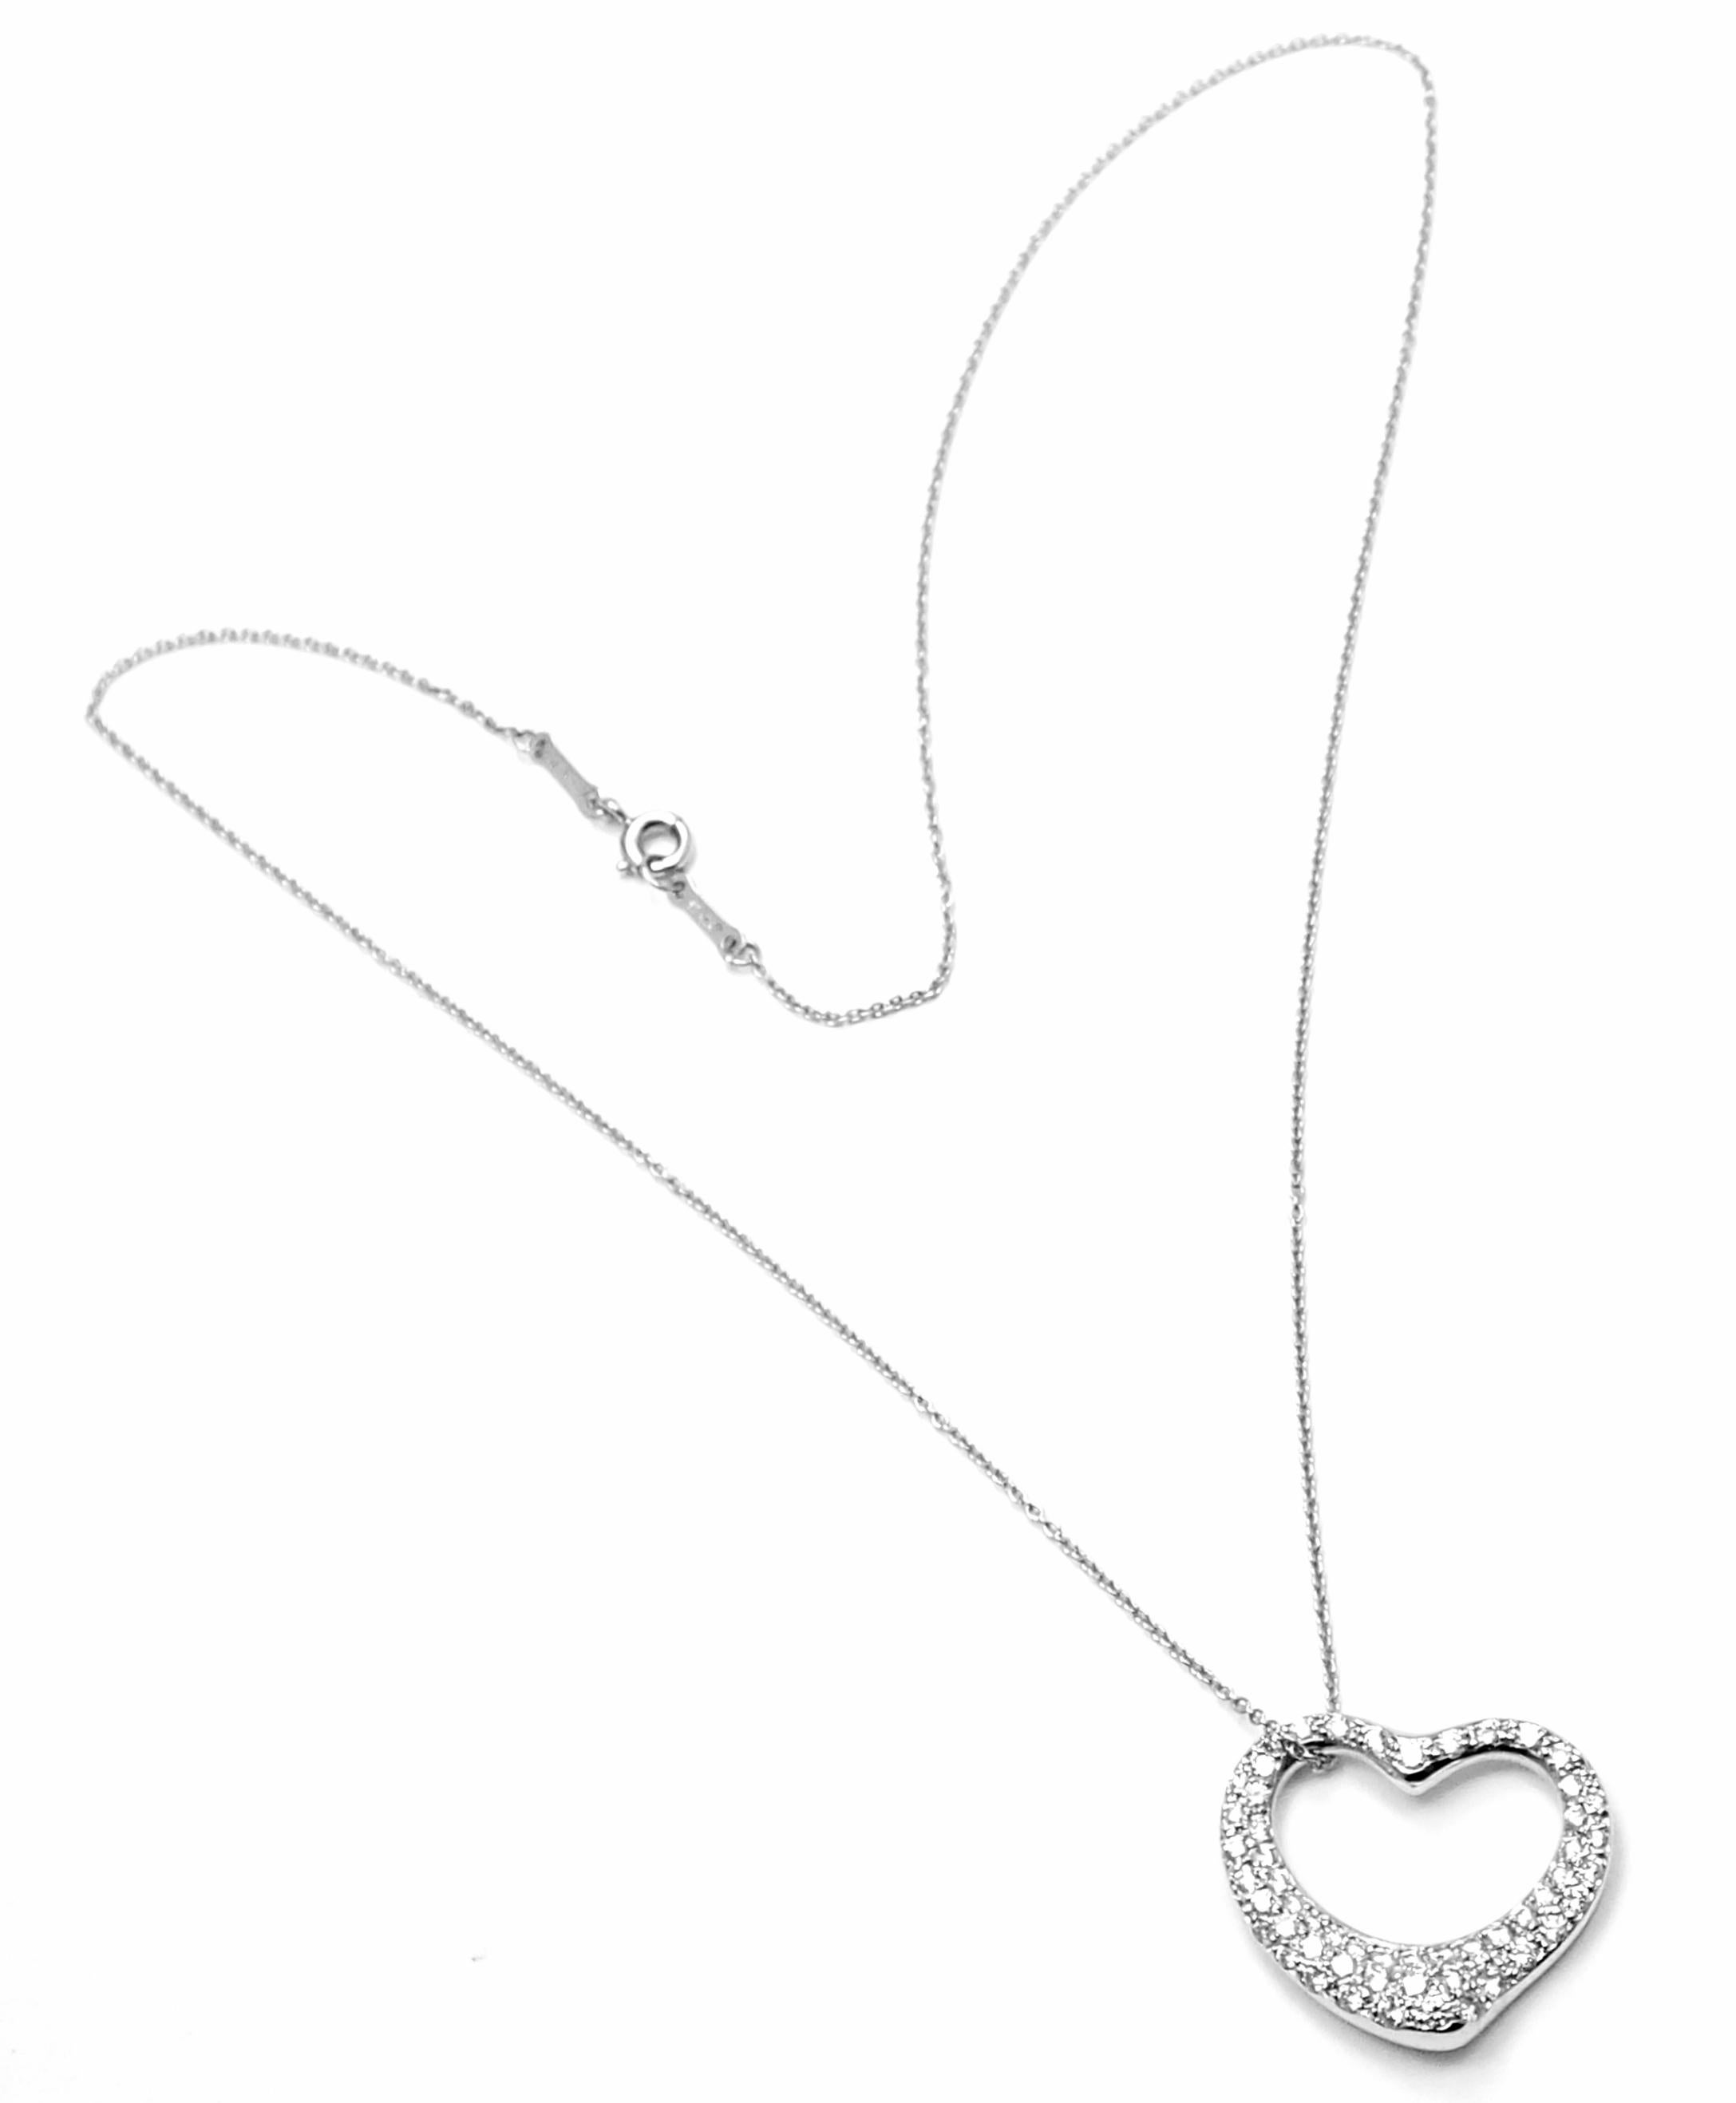 Platinum Diamond Medium Open Heart Pendant Necklace by Elsa Peretti for Tiffany & Co.
With Round brilliant cut diamonds VS1 clarity, G color
Details:
Length: 16